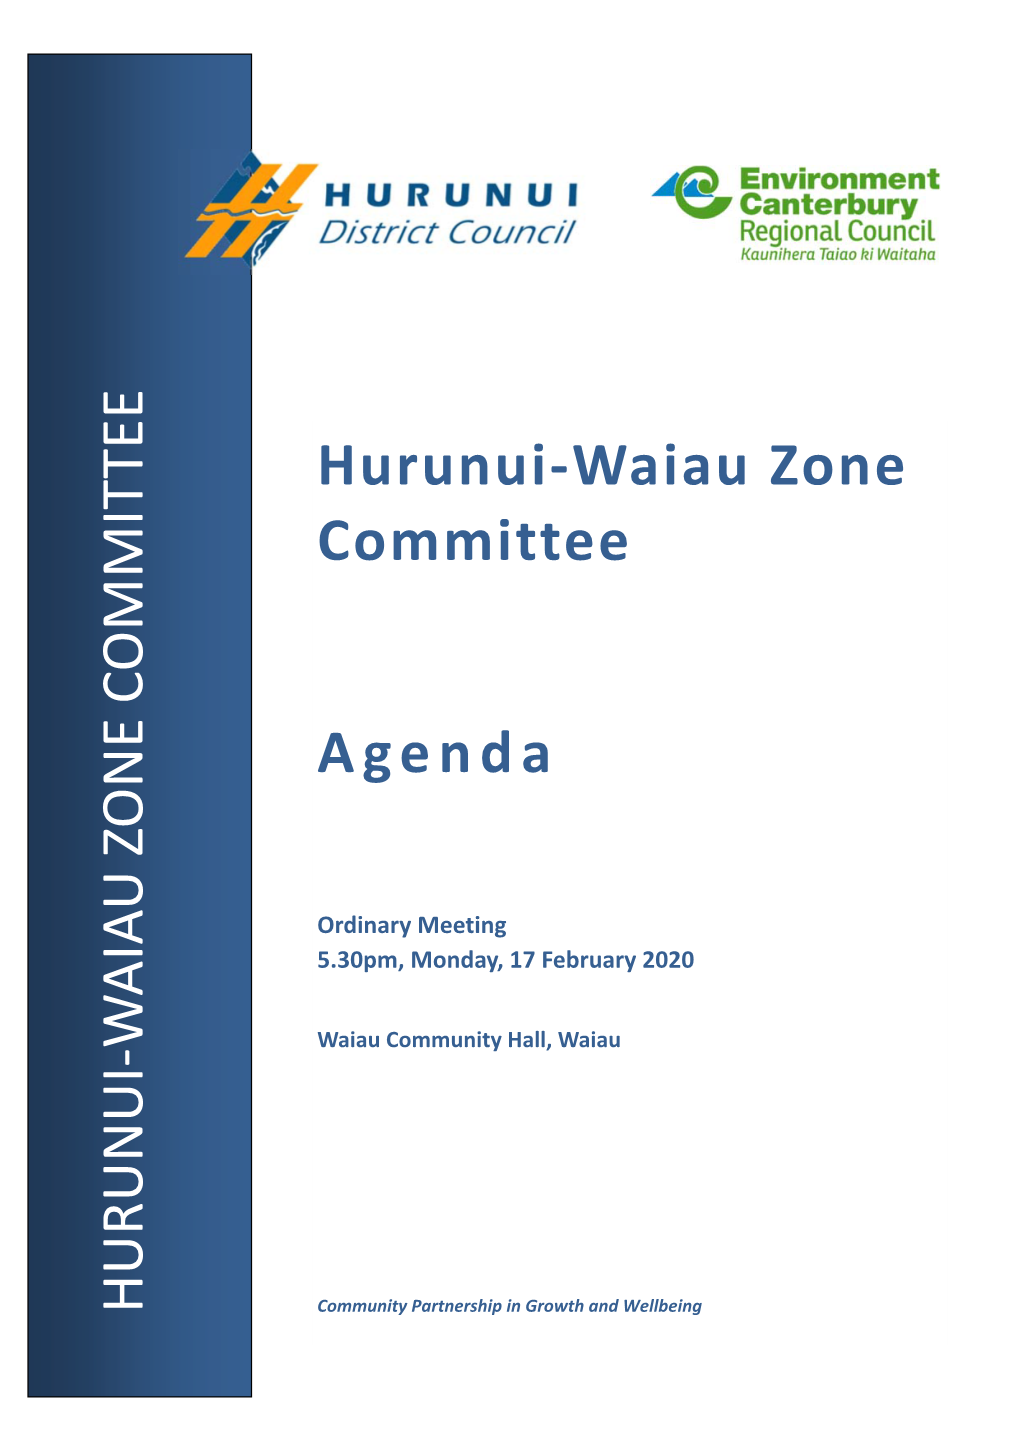 Hurunui-Waiau Zone Committee Agenda